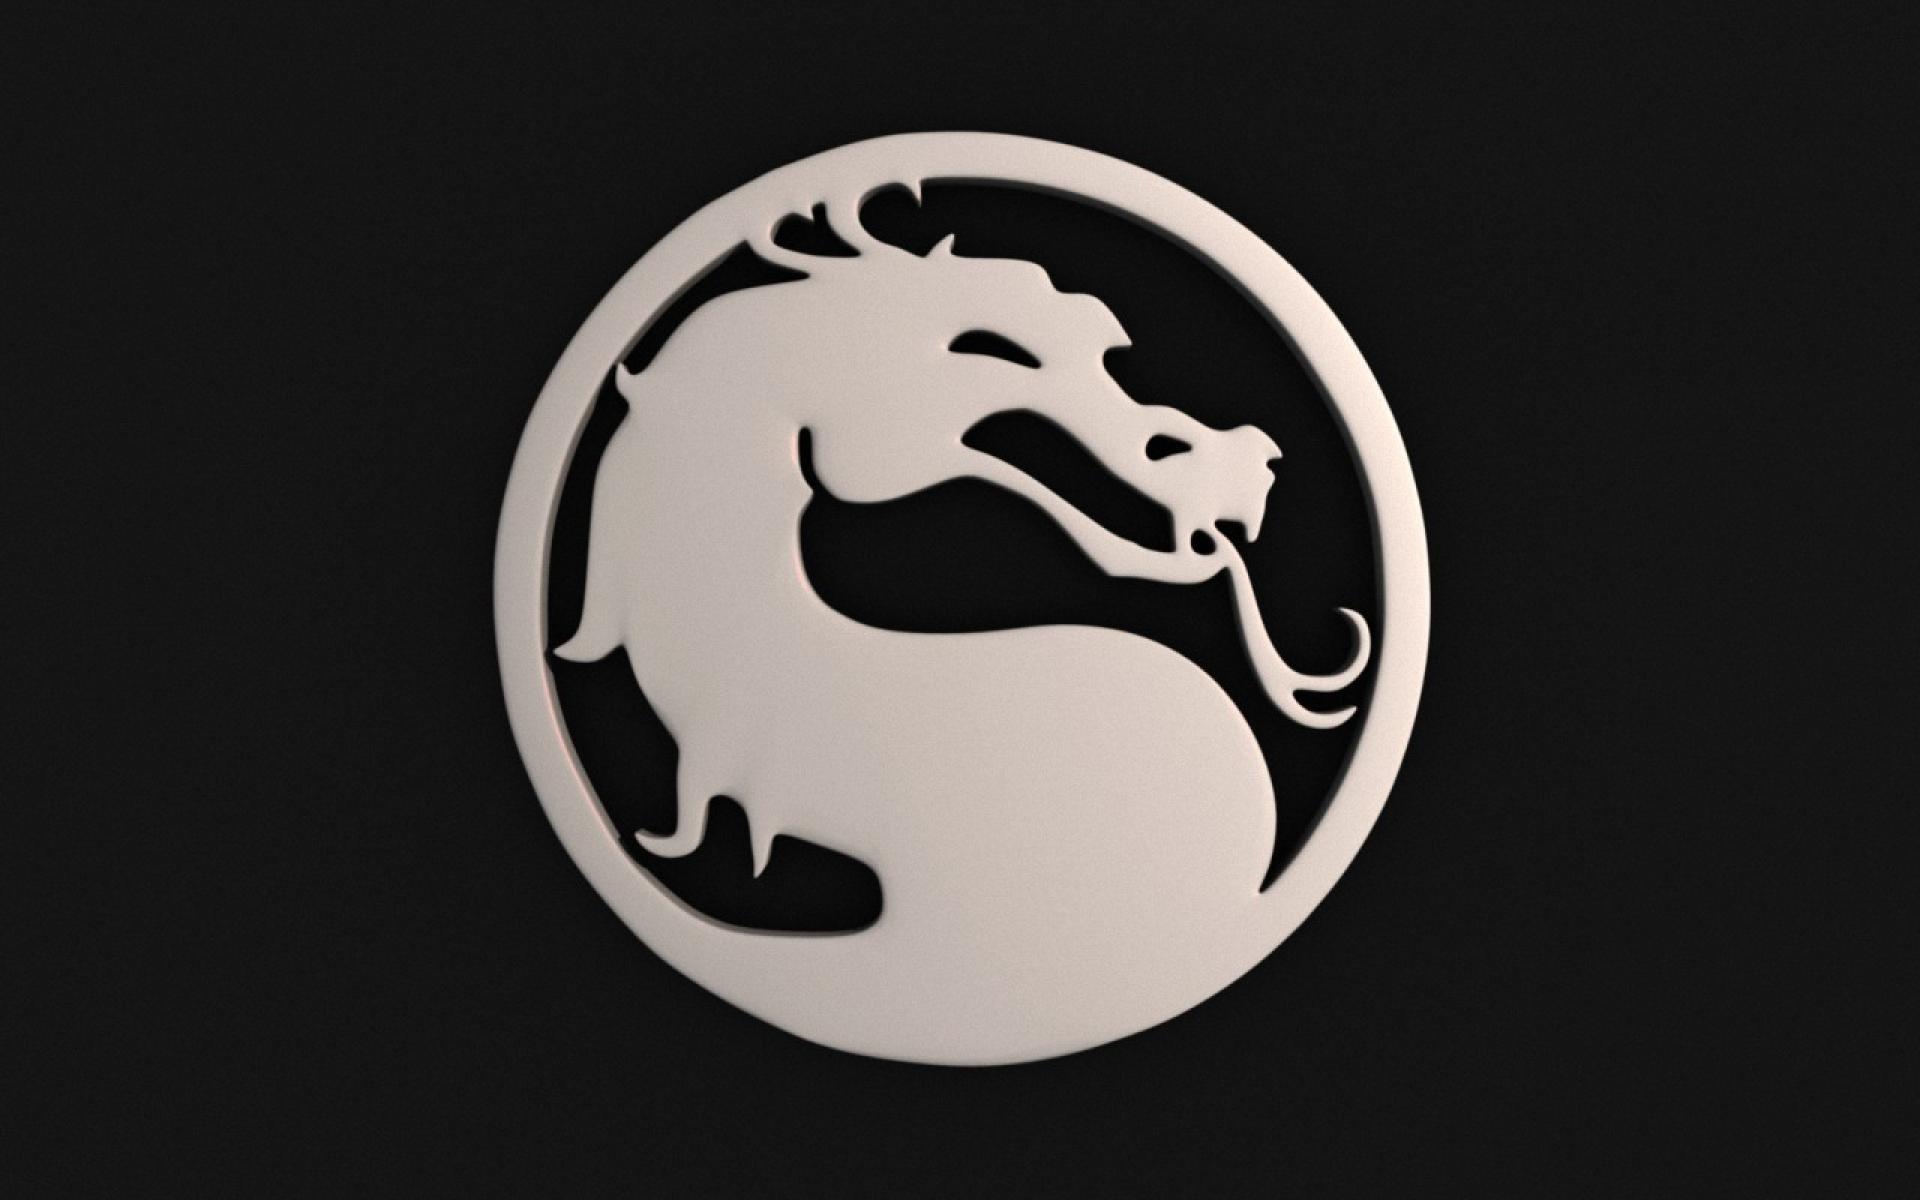 General 1920x1200 Mortal Kombat Mortal Kombat X dark dragon logo minimalism simple background video games